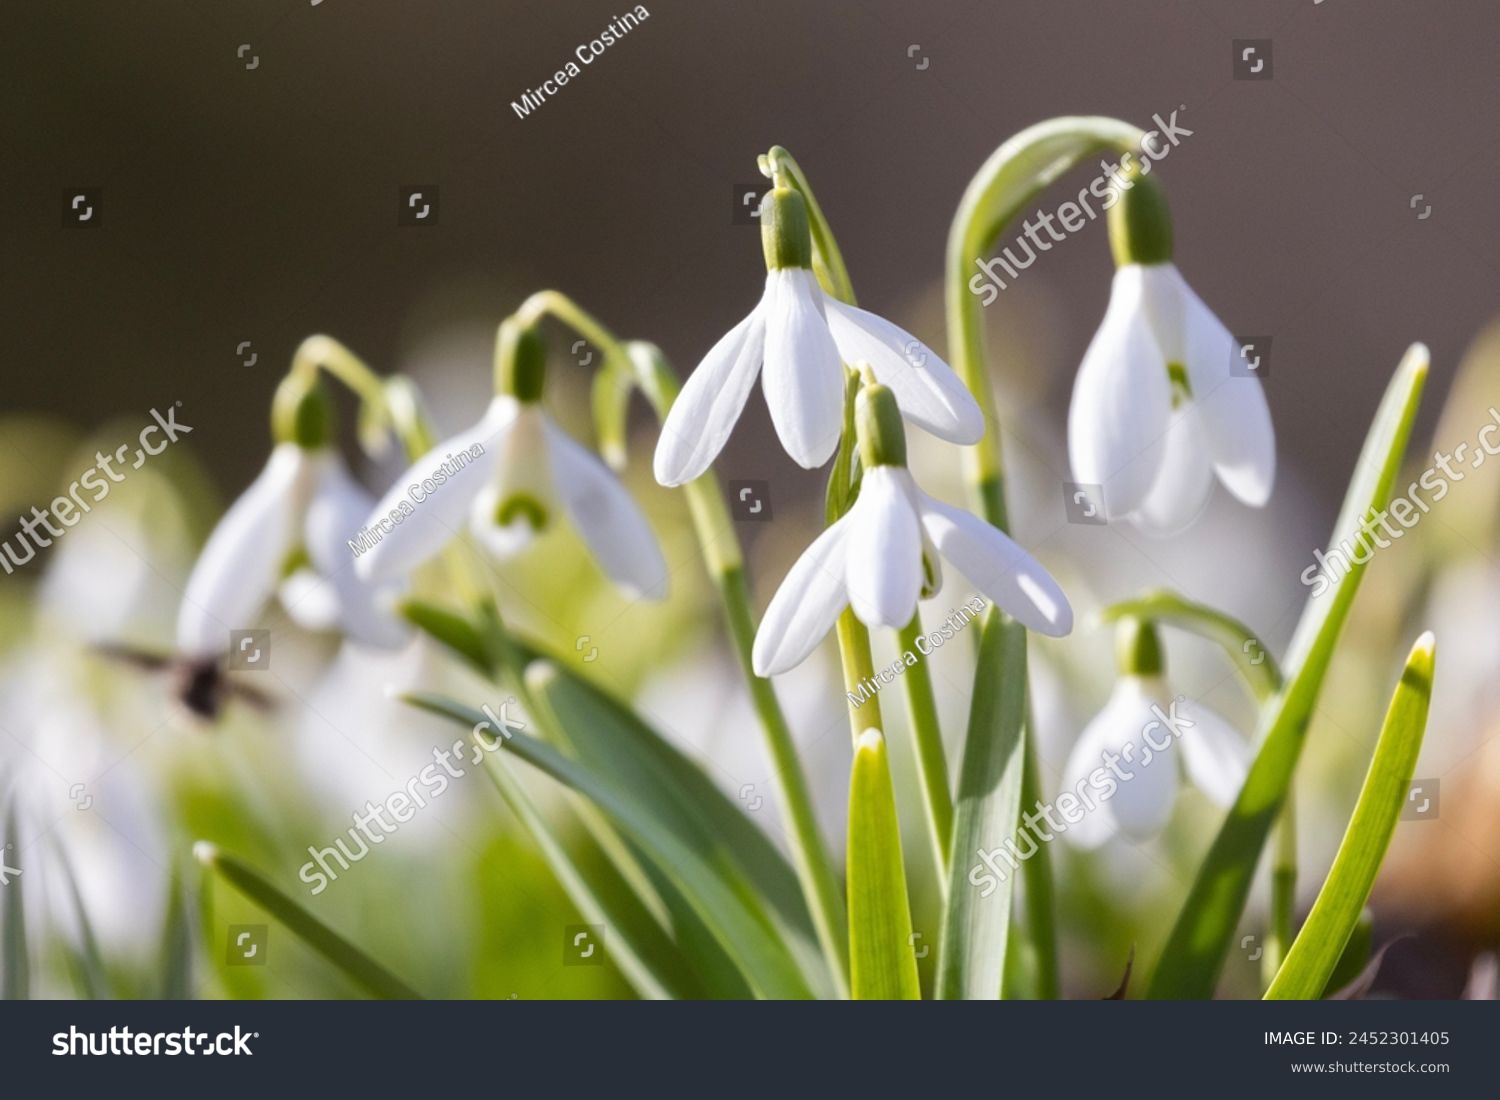 Galanthus nivalis, the snowdrop or common snowdrop #2452301405